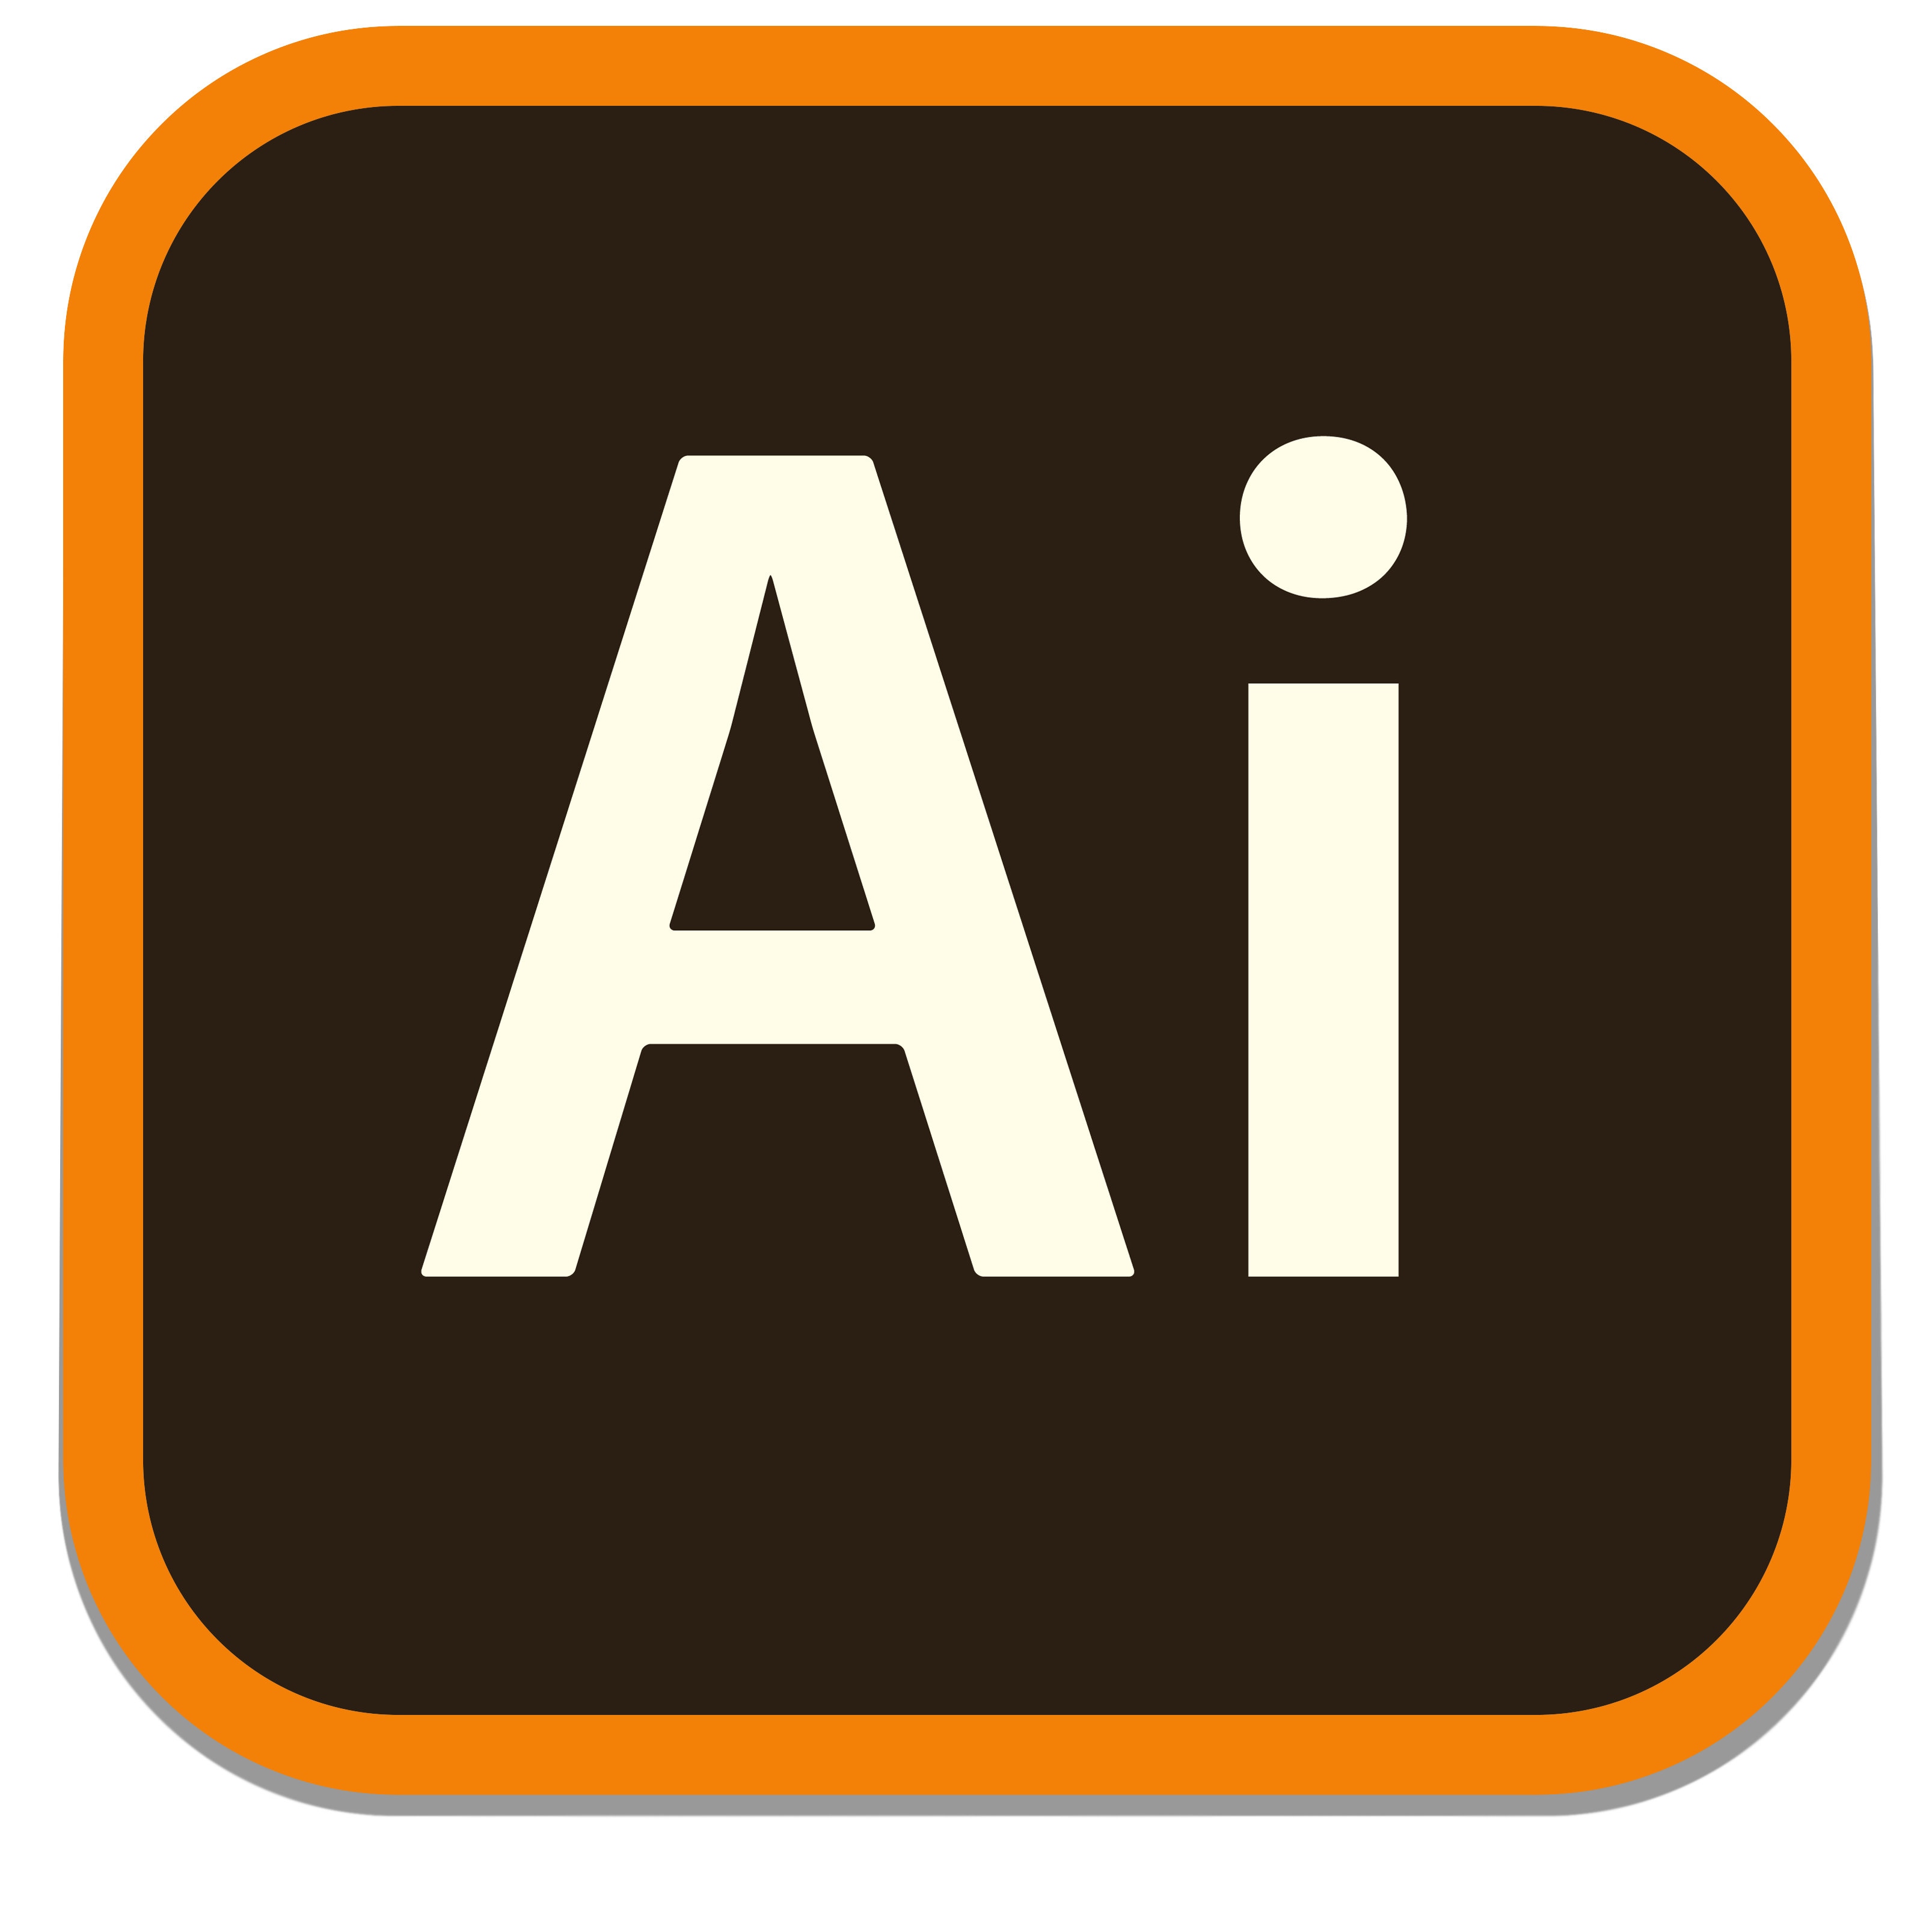 Значок Adobe Illustrator. Adobe иллюстратор иконка. Adobe Illustrator логотип PNG. Адобе иллюстратор ярлык. Ai icon